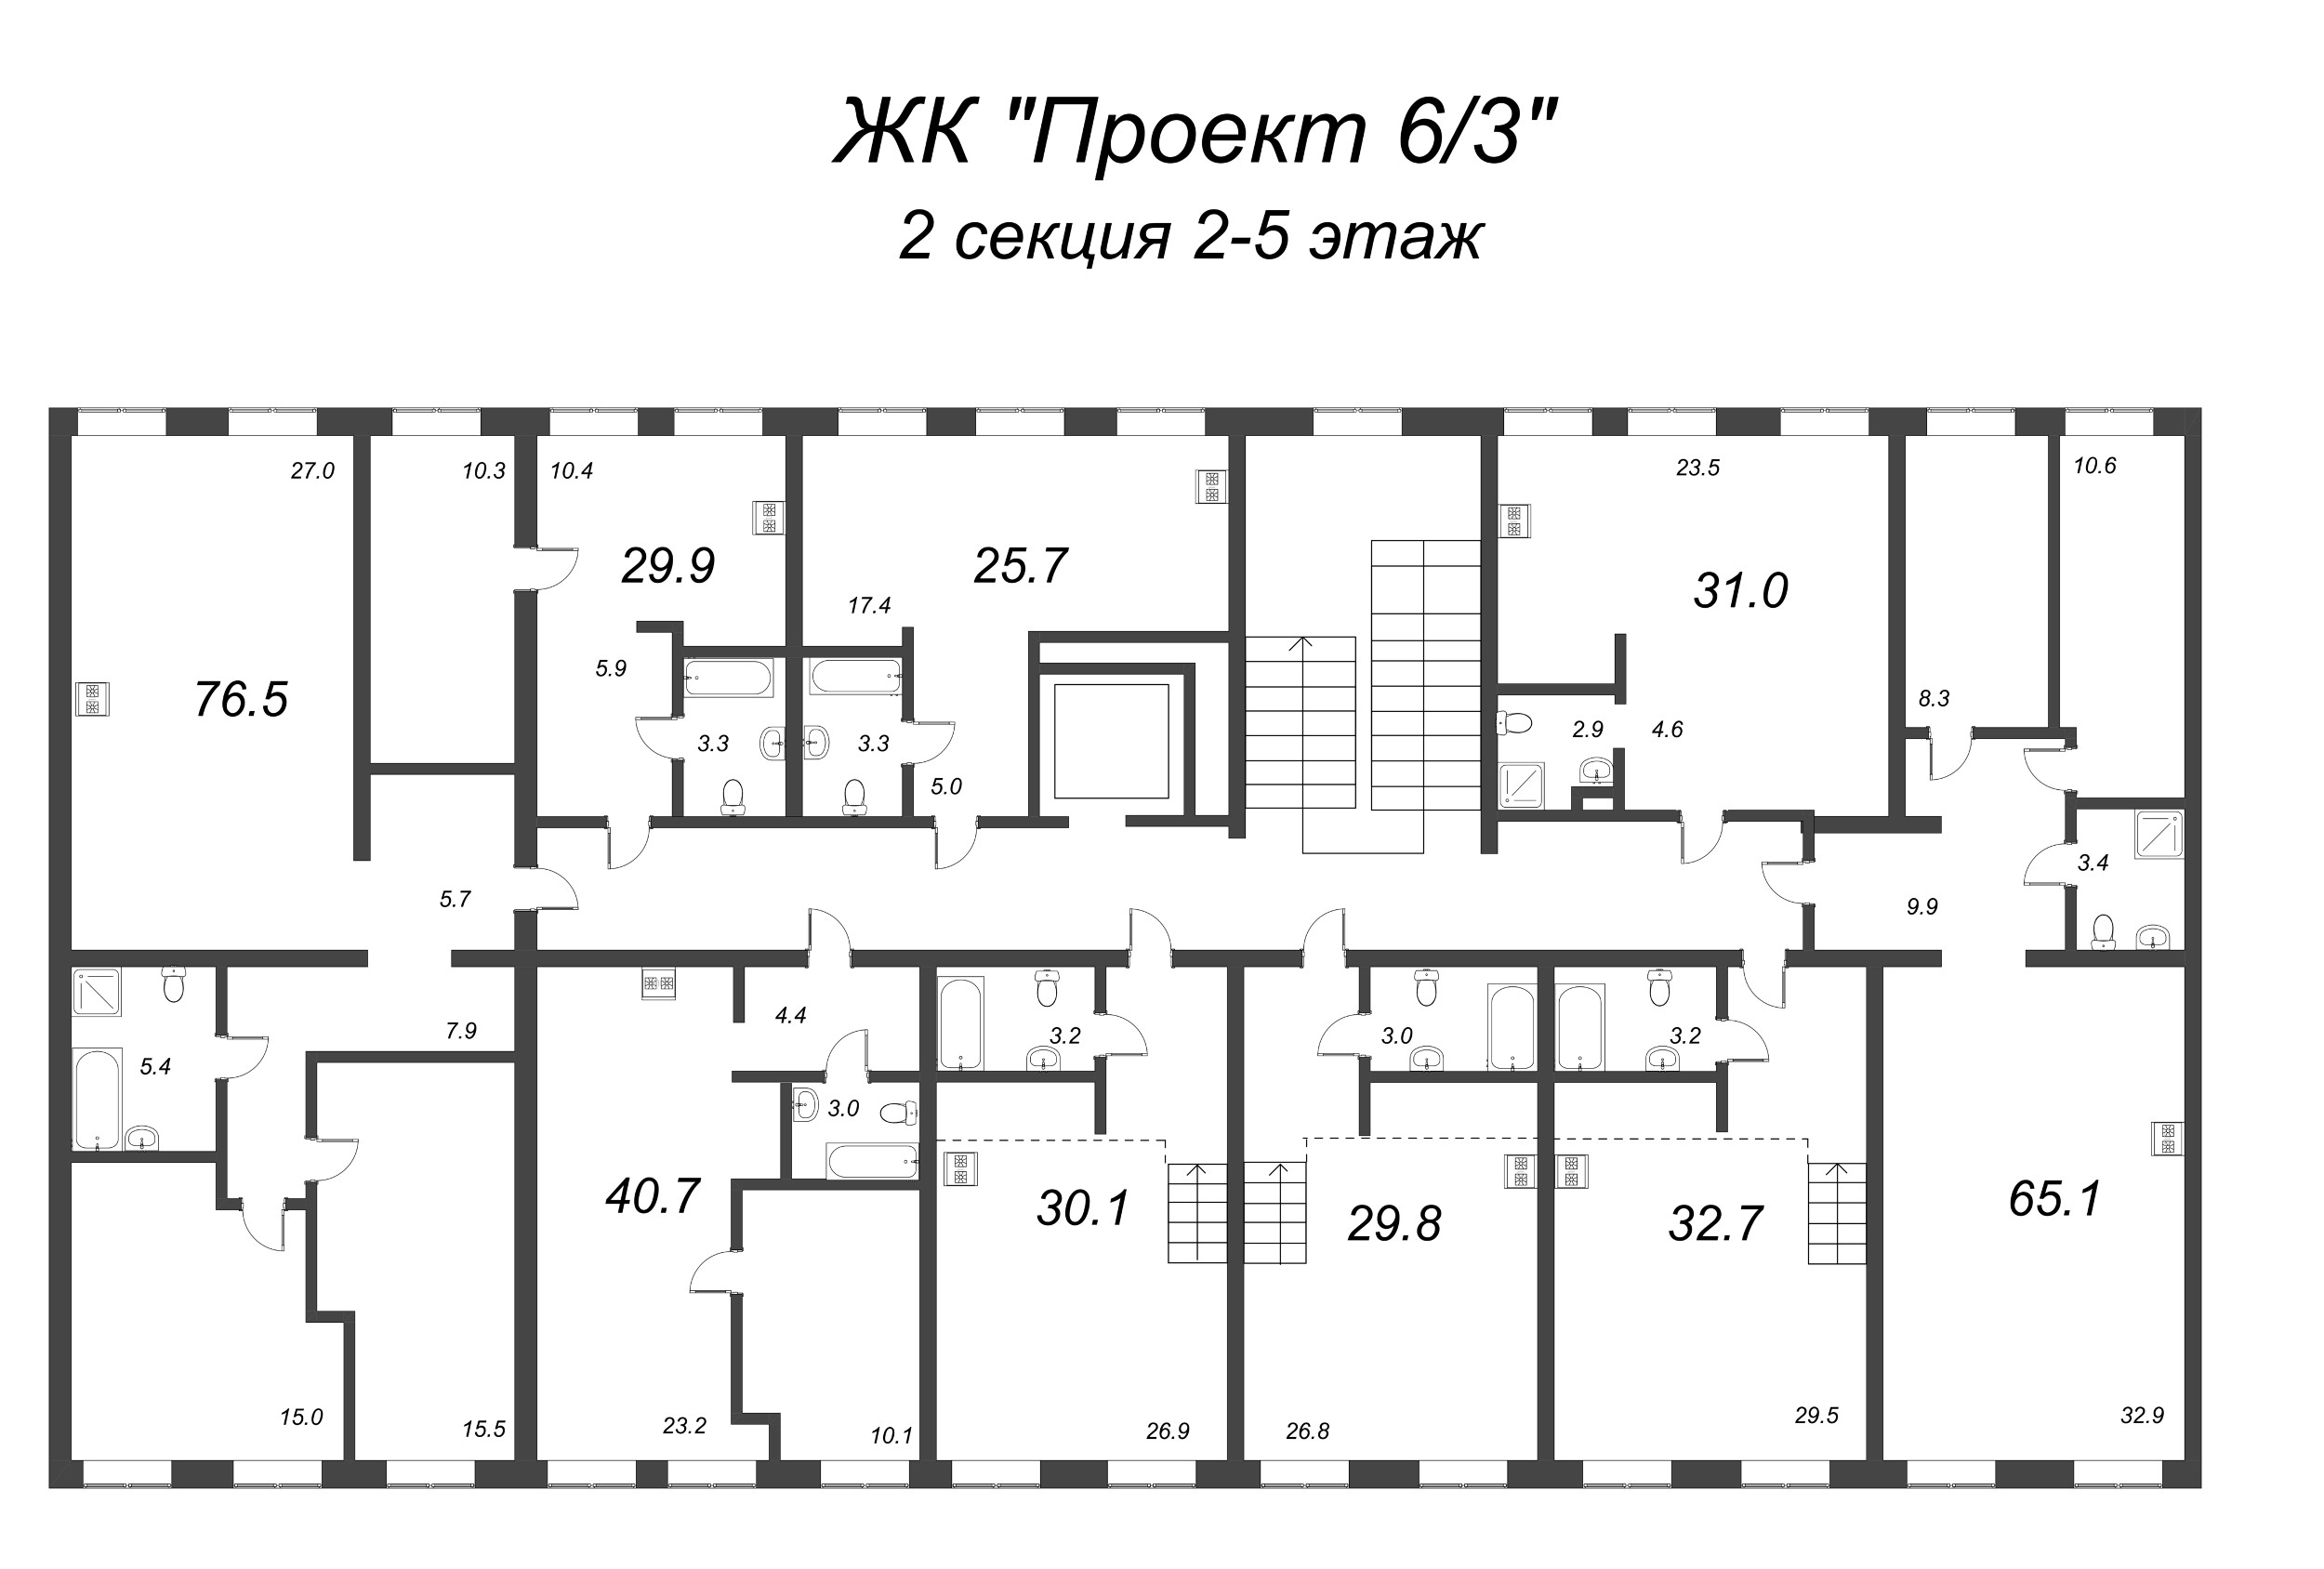 2-комнатная (Евро) квартира, 65.1 м² - планировка этажа